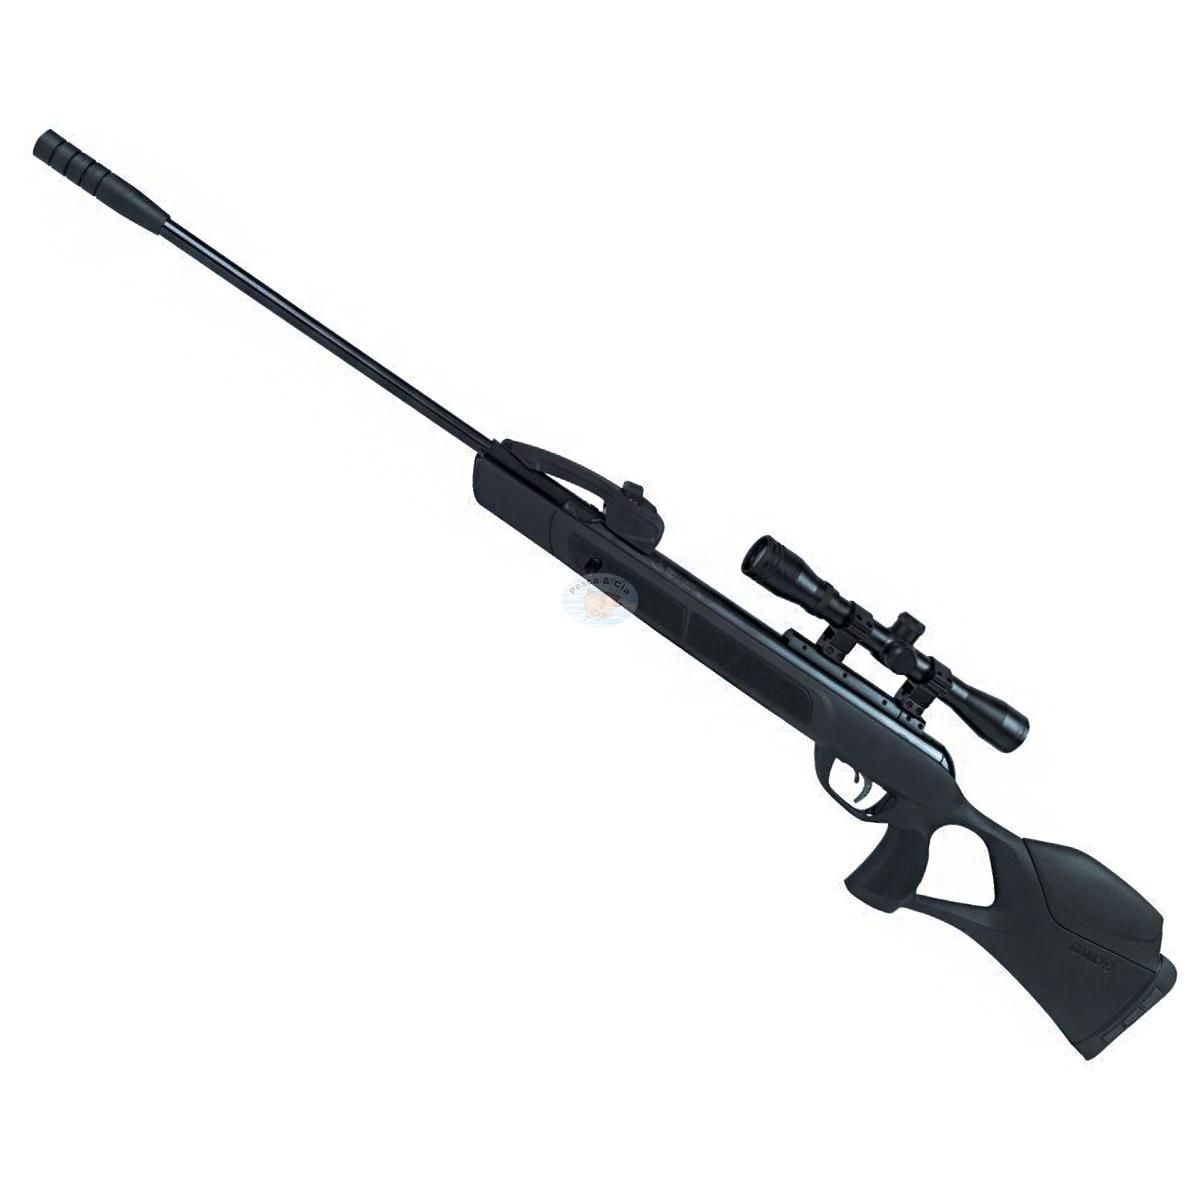 Falcon Armas - Rifle de pressão black ops sniper Calibre 5,5mm